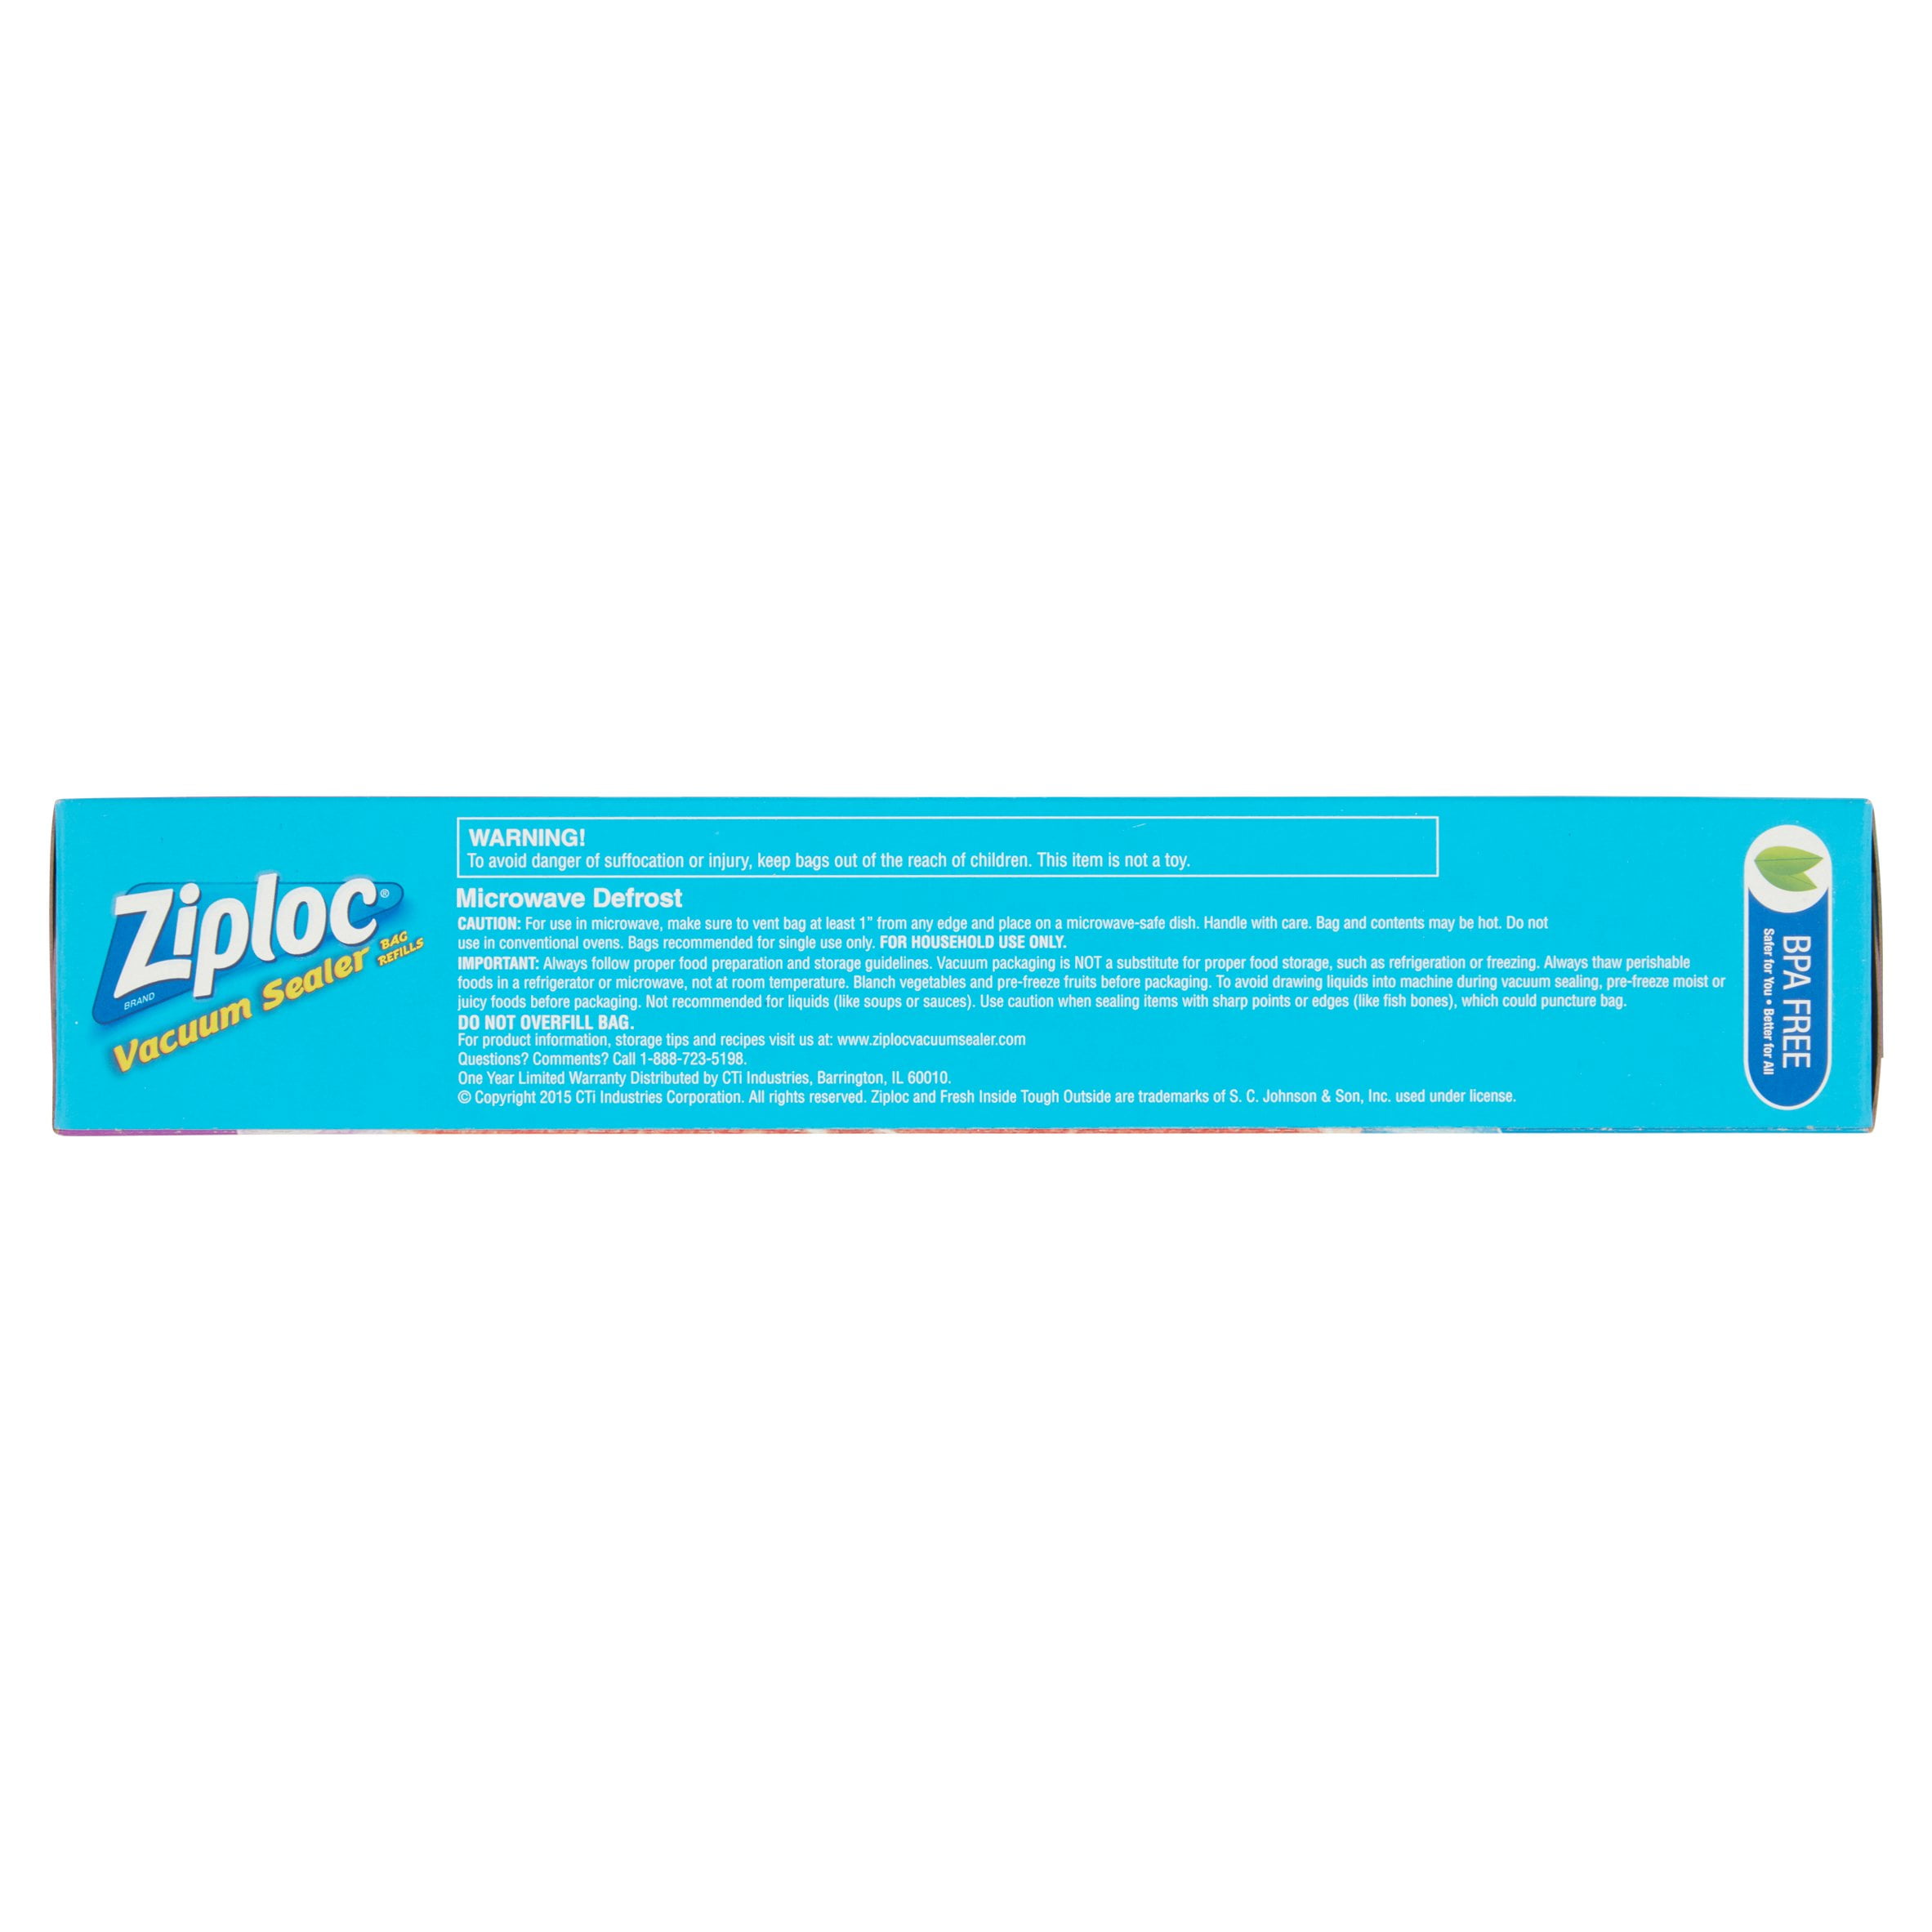 Ziploc 3-Count 42-Gallon (s) Vacuum Seal Storage Bags at